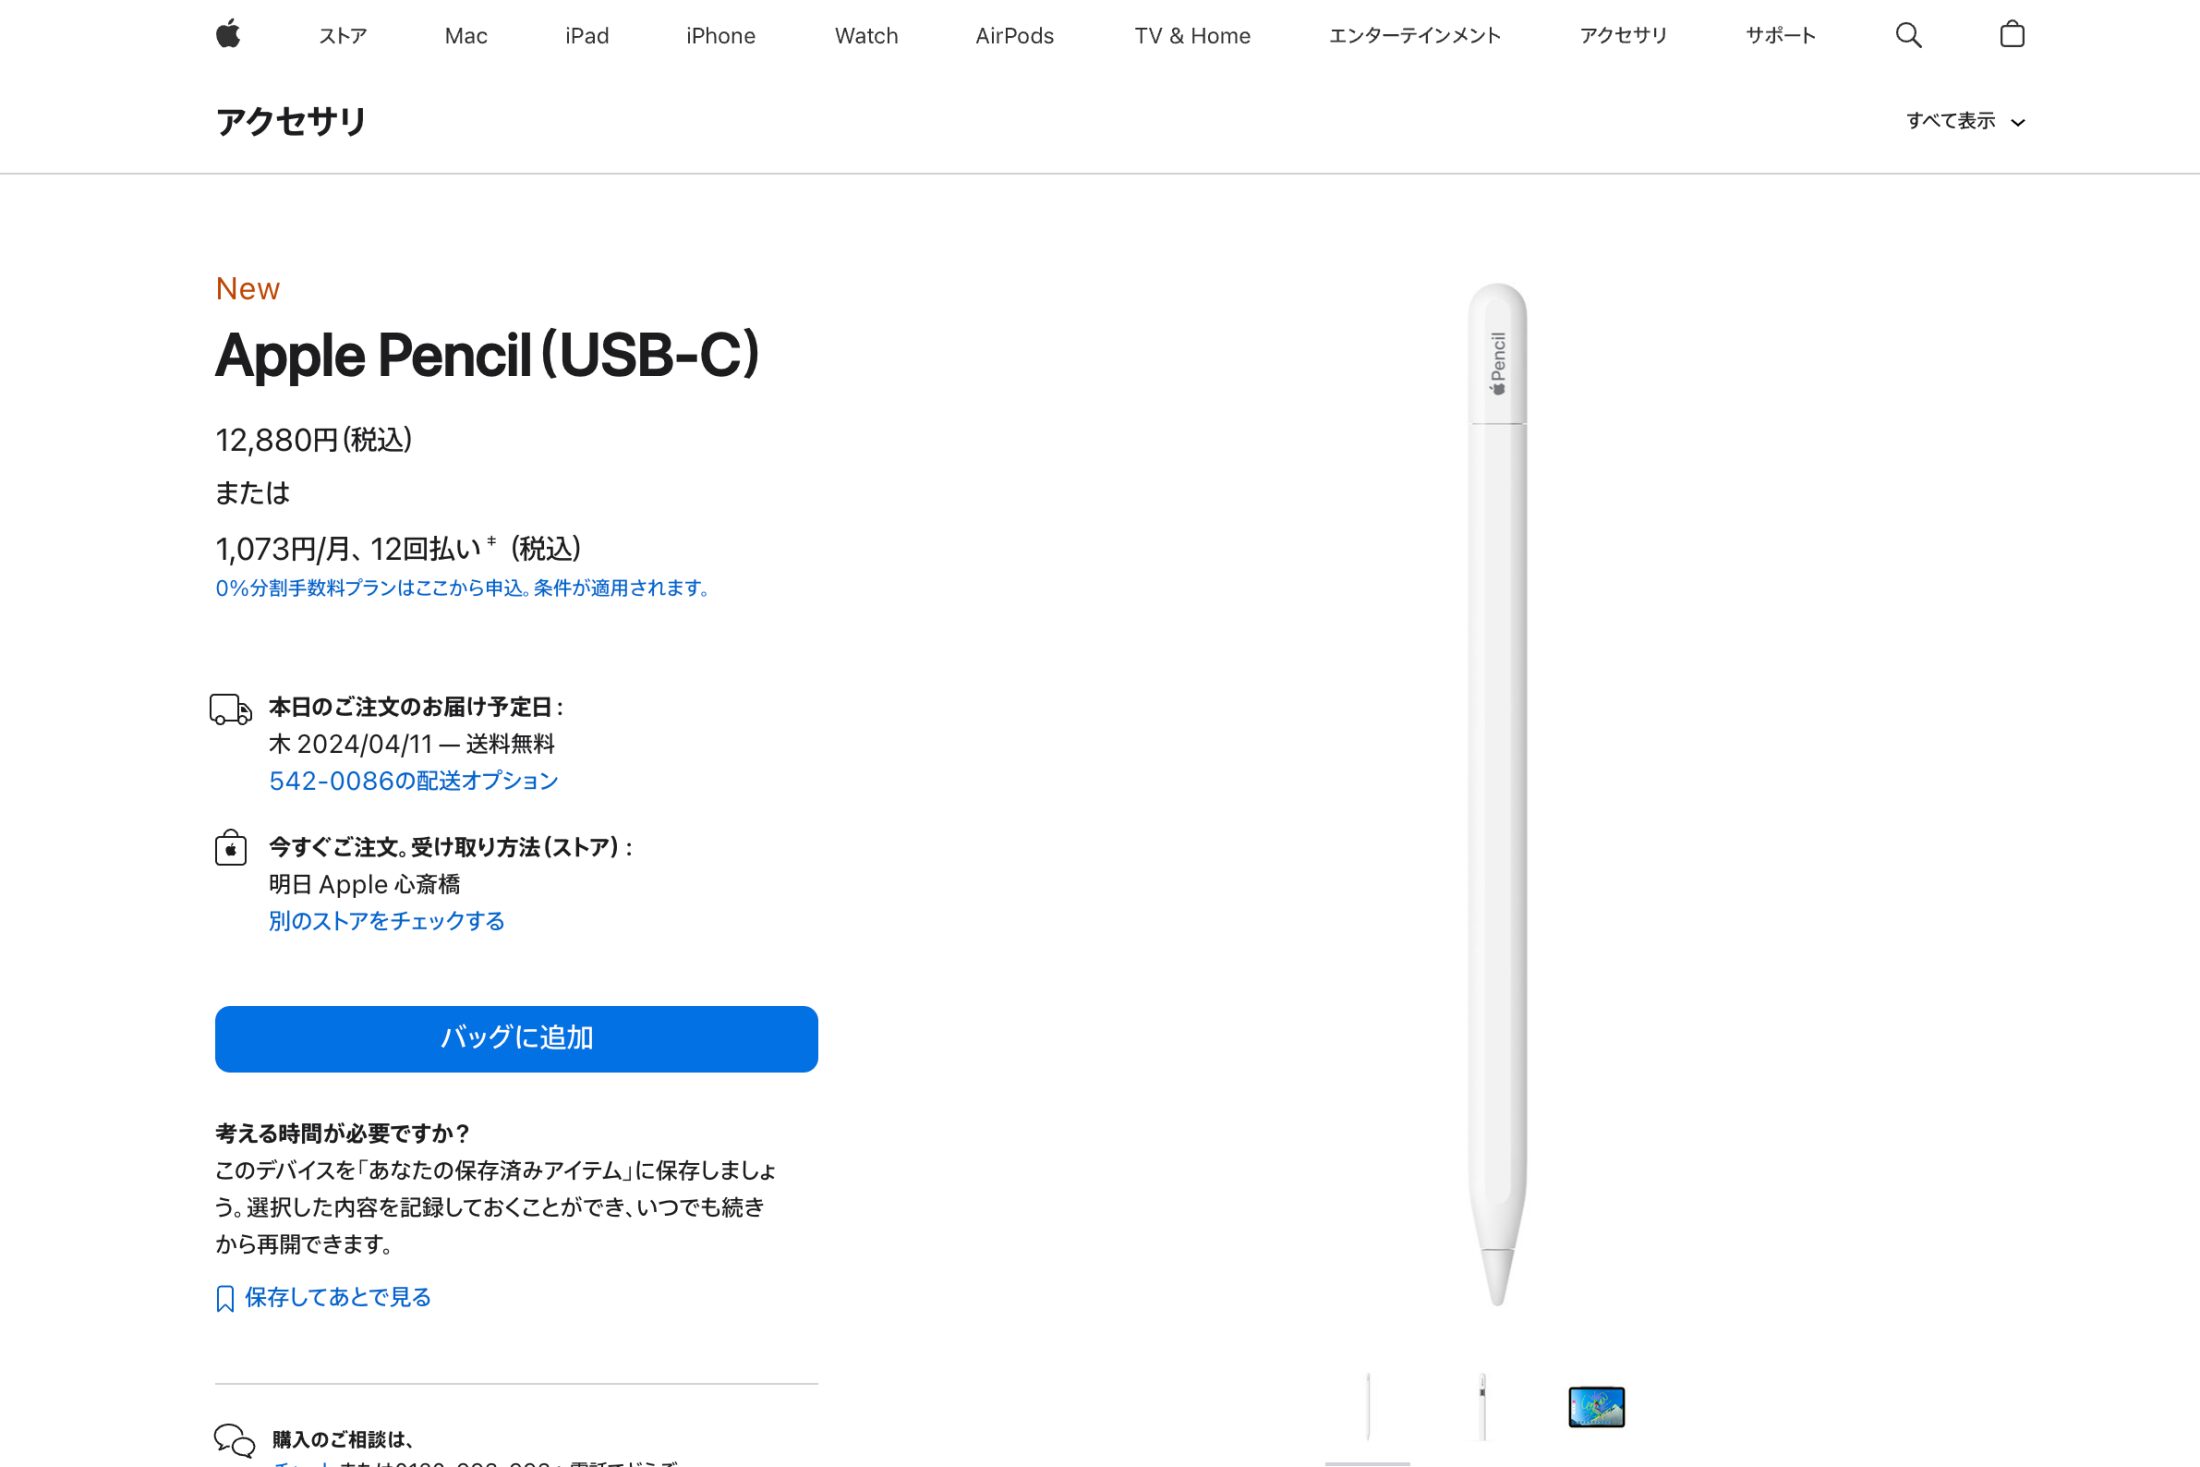 Apple Pencil USB-C
